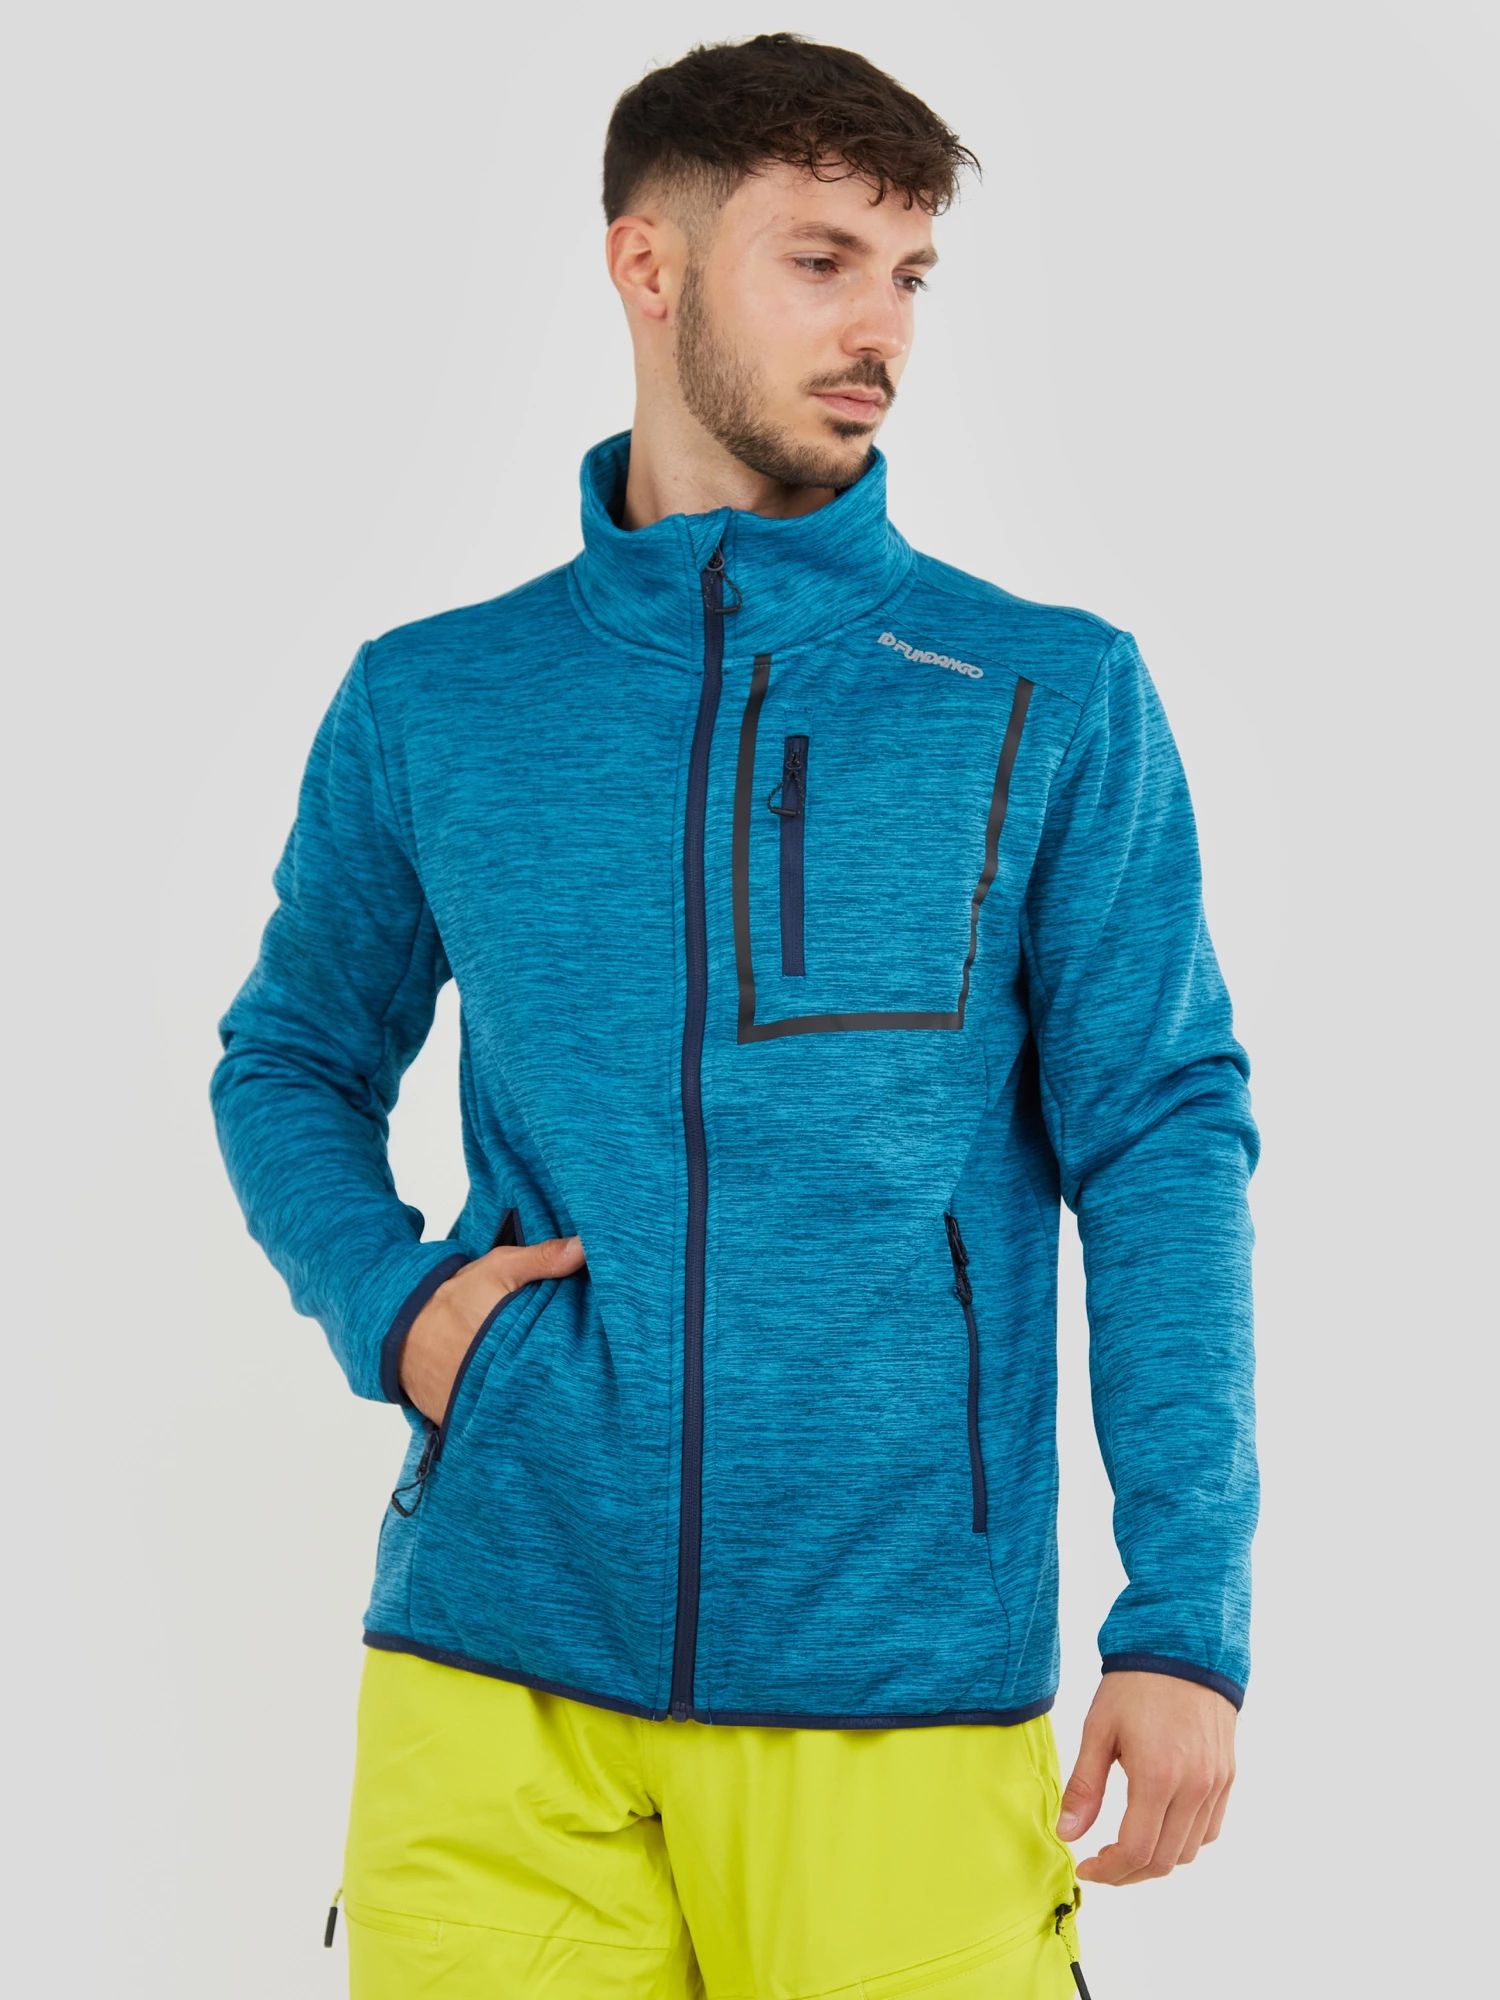 Куртка Fundango для мужчин, софтшелл, размер M, 1MAD106, бирюзово-синяя